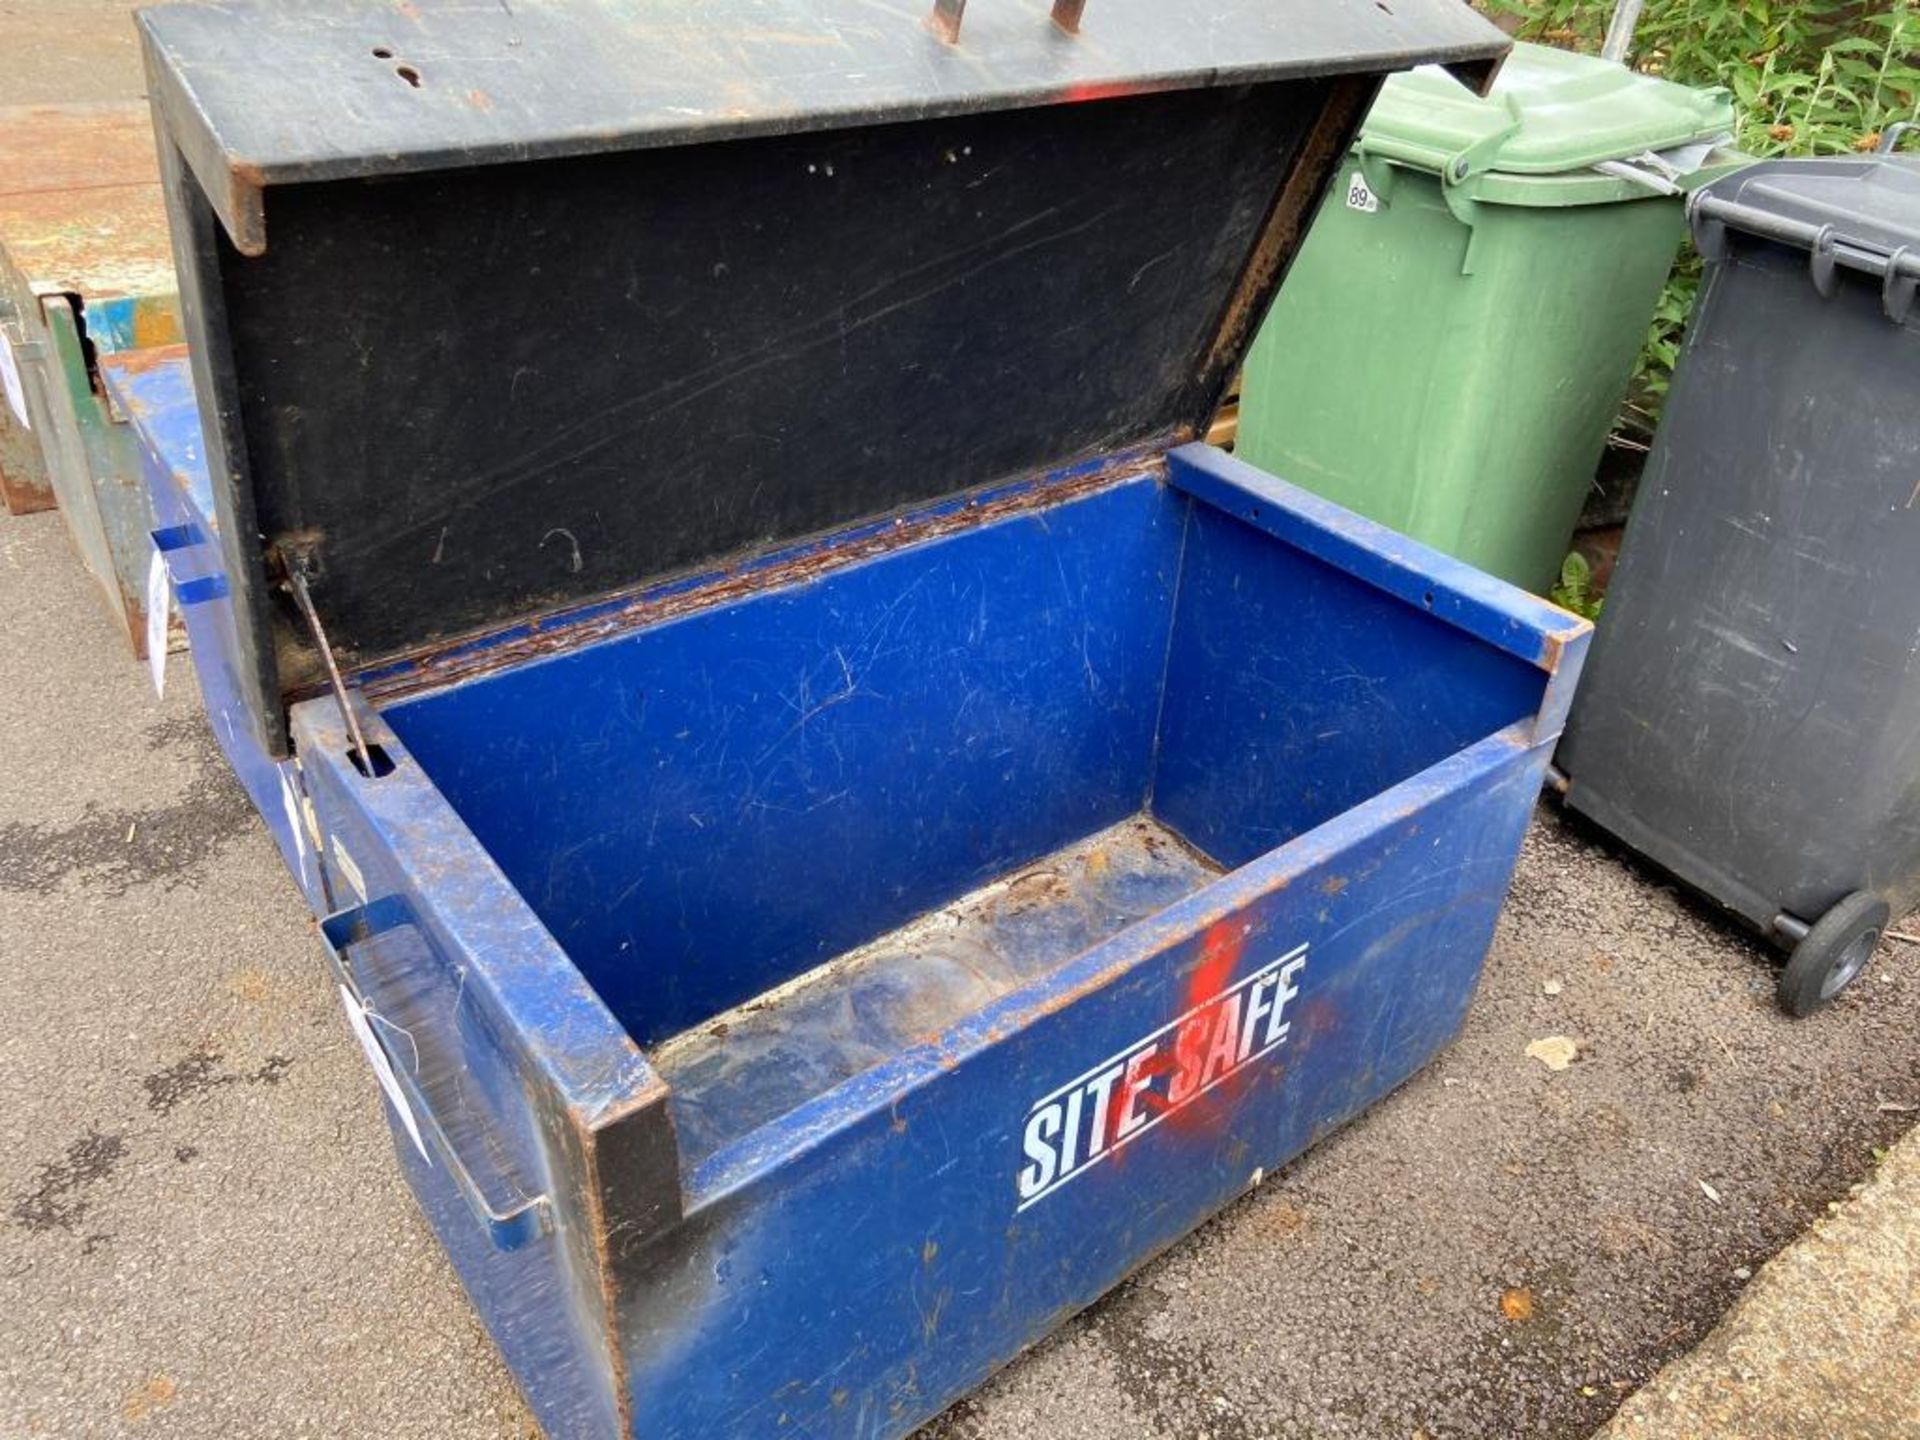 Steel site box on wheels (no key) 125cm x 65cm x 60cm - Image 3 of 3